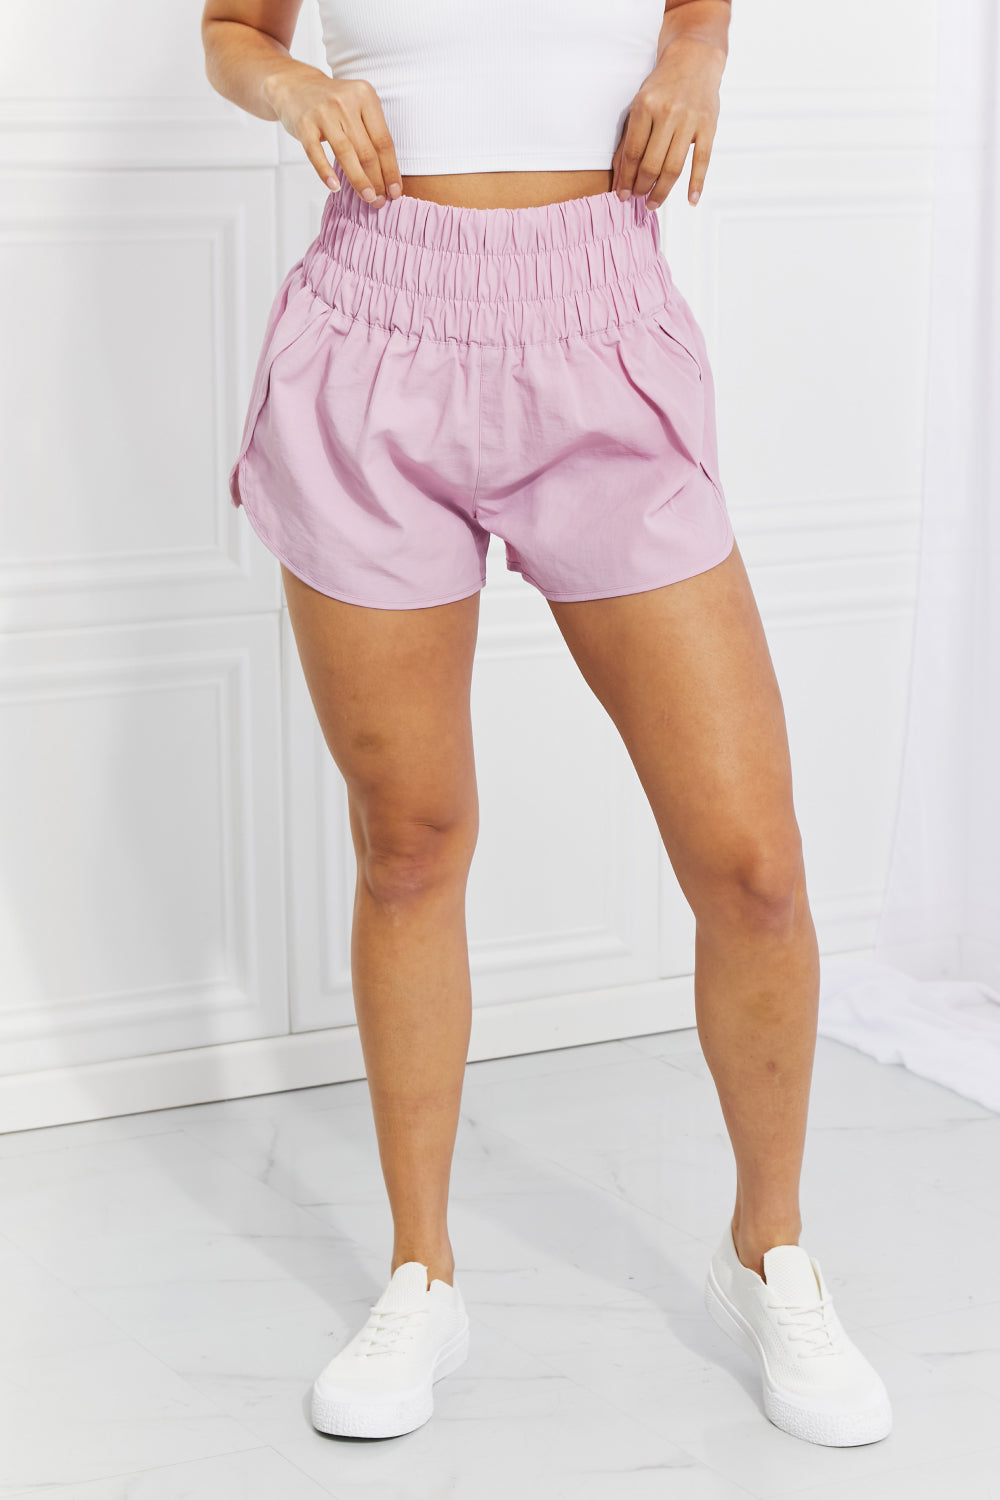 Zenana Cross Country Smocked Waist Running Shorts in Pink Posh Styles Apparel